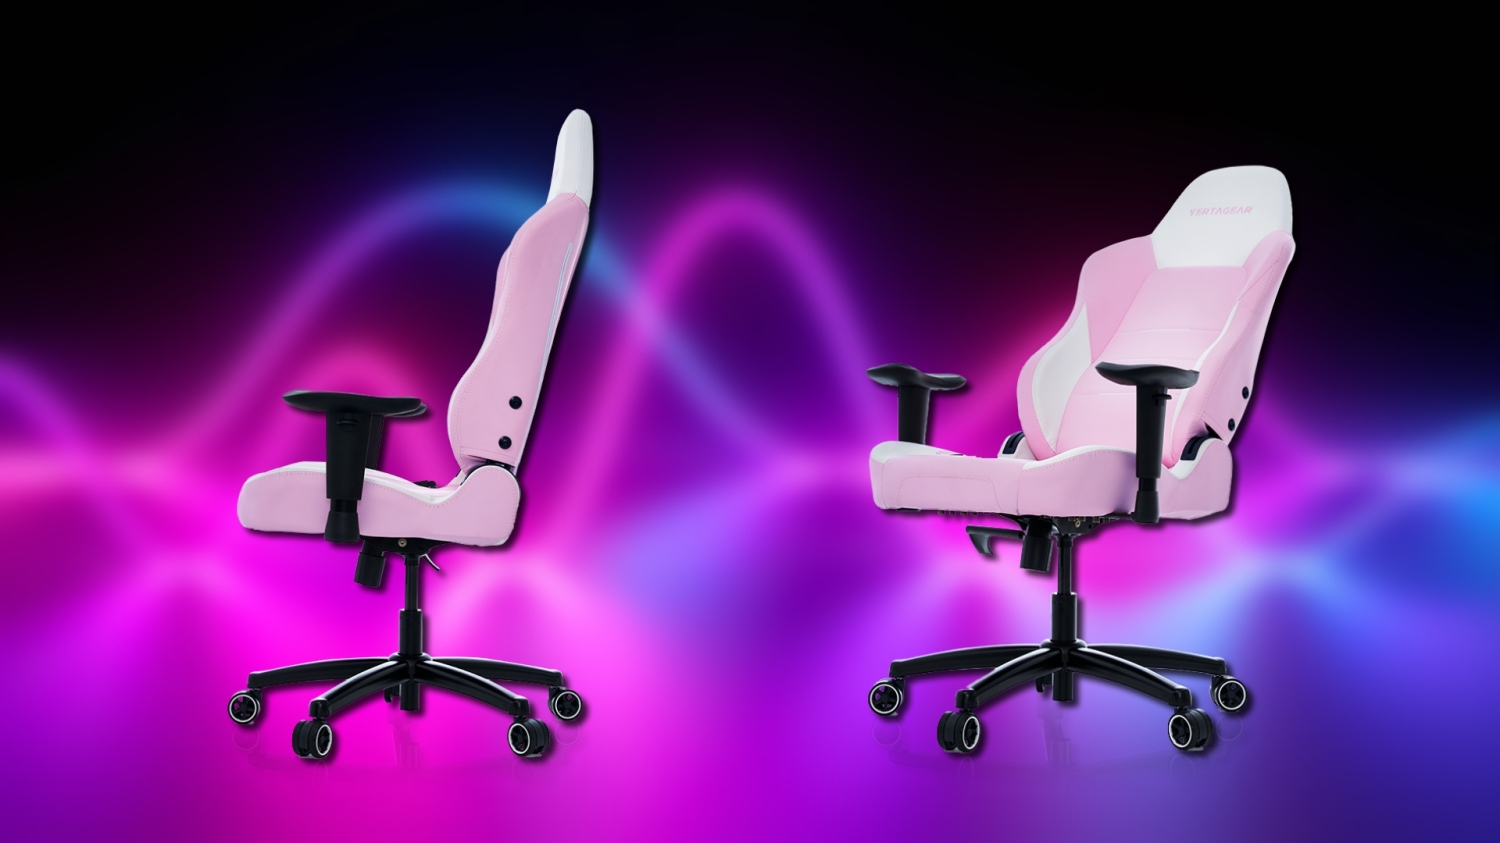 TweakTown Enlarged Image - Vertagear's new PL1000 ergonomic gaming chair.